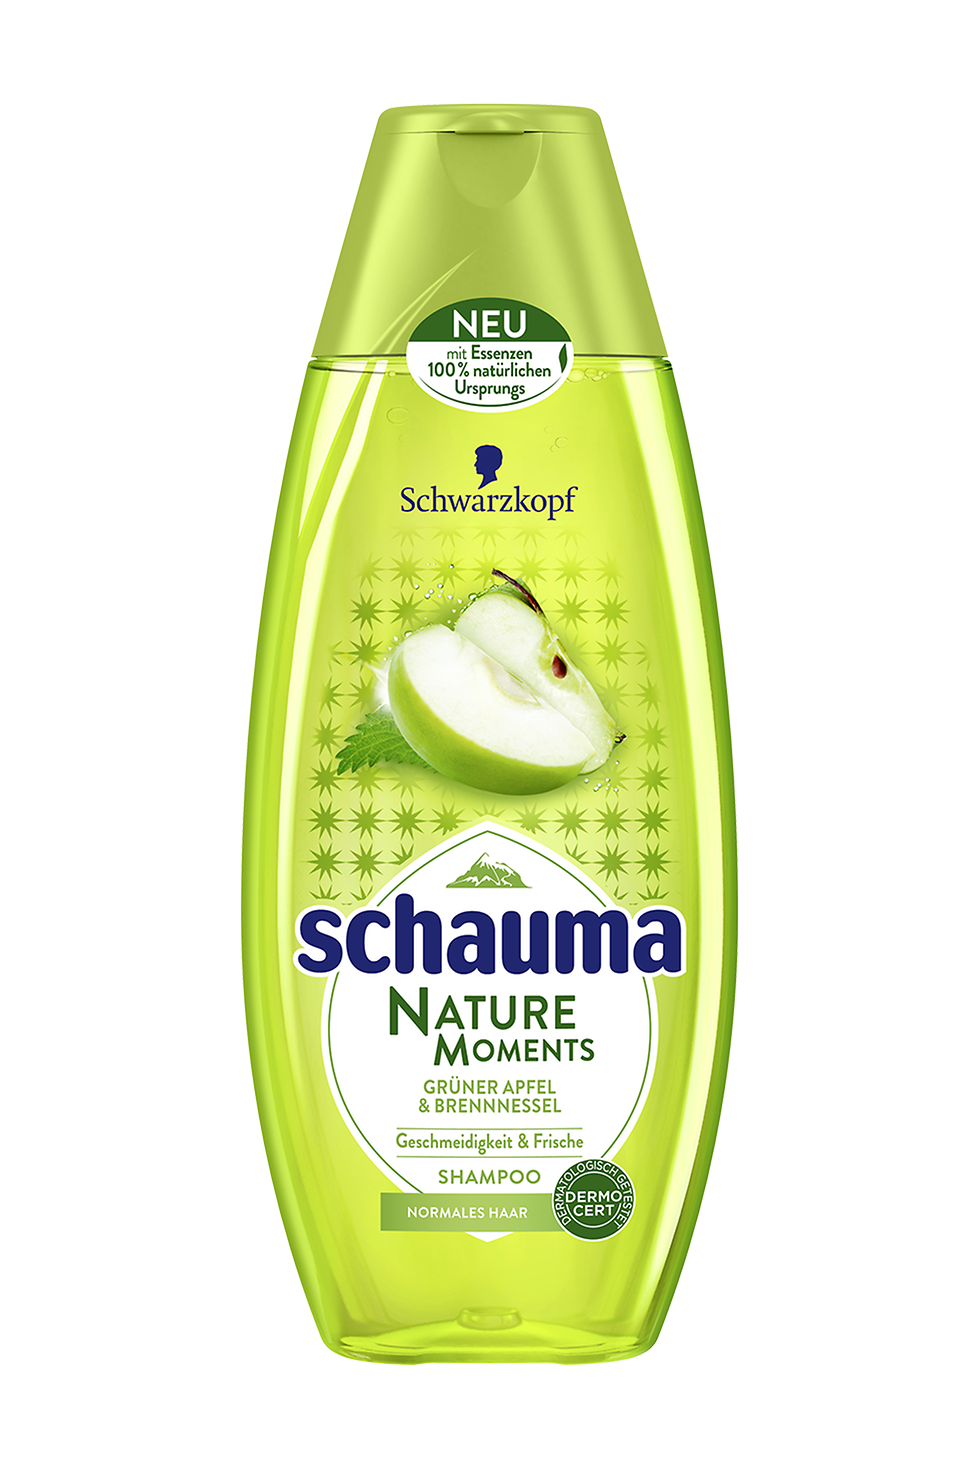 Schauma Nature Moments Grüner Apfel & Brennnessel Shampoo